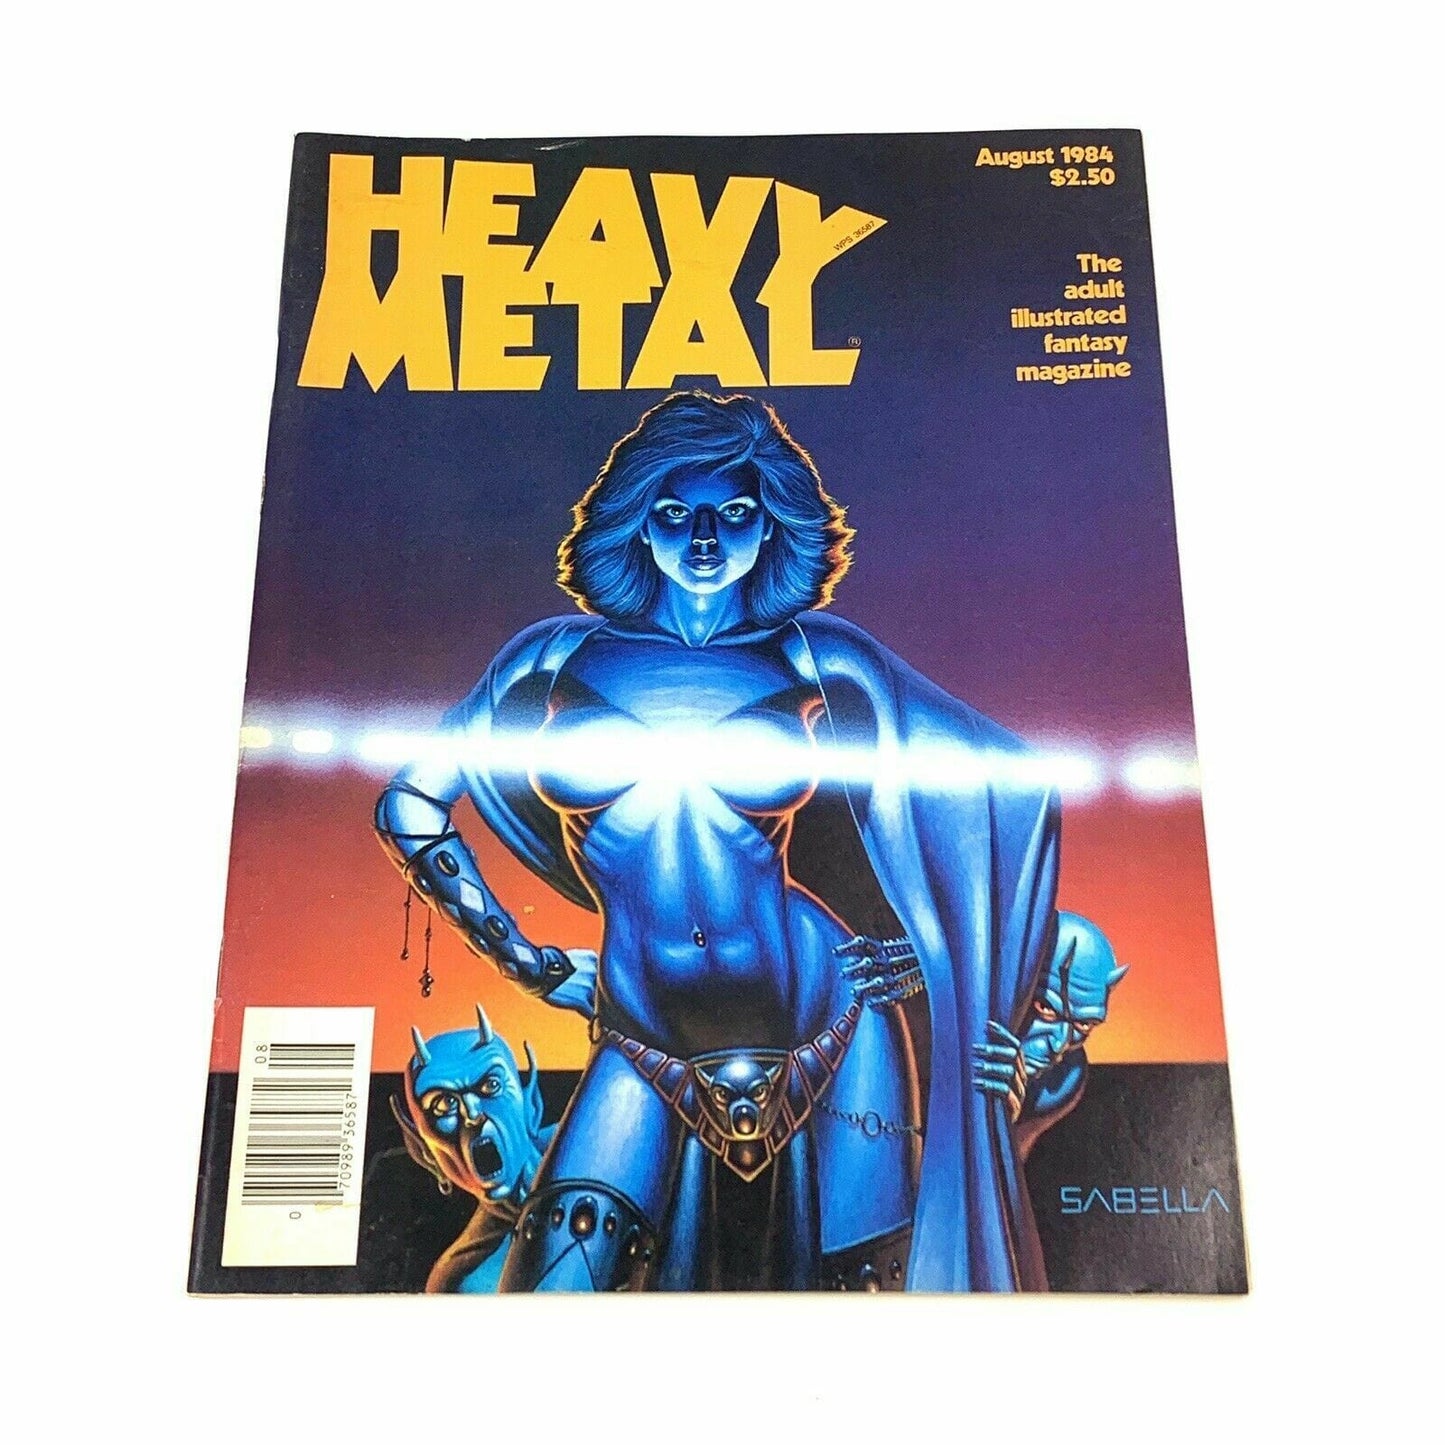 HEAVY METAL - Adult Illustrative Fantasy Magazine - August 1984 - parsimonyshoppes